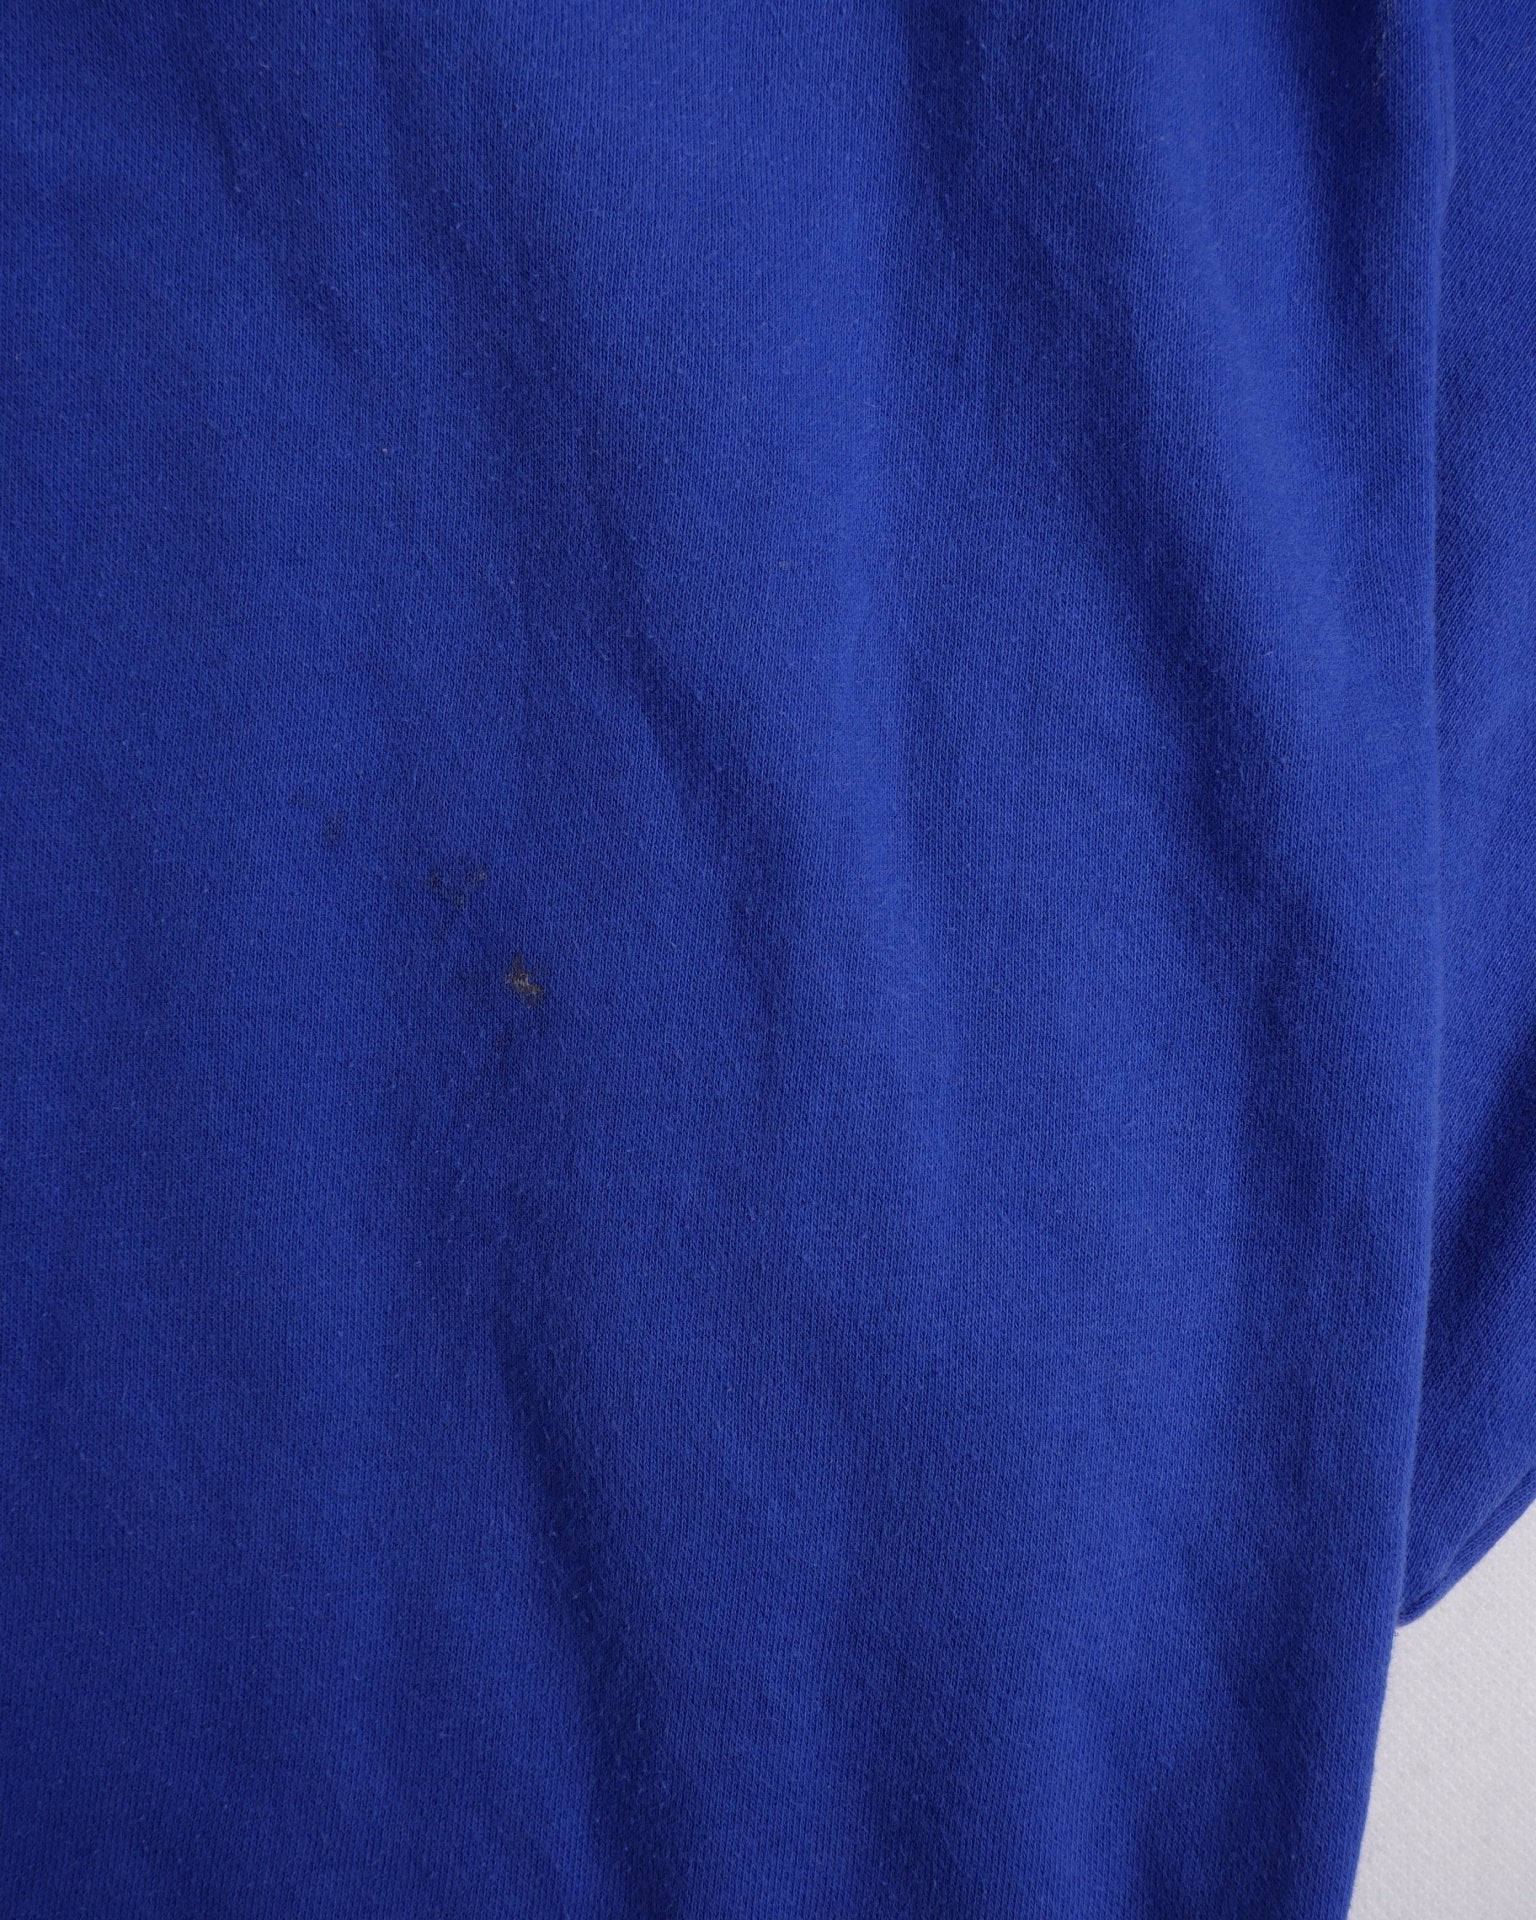 Adidas embroidered Logo blue Half Zip Sweater - Peeces